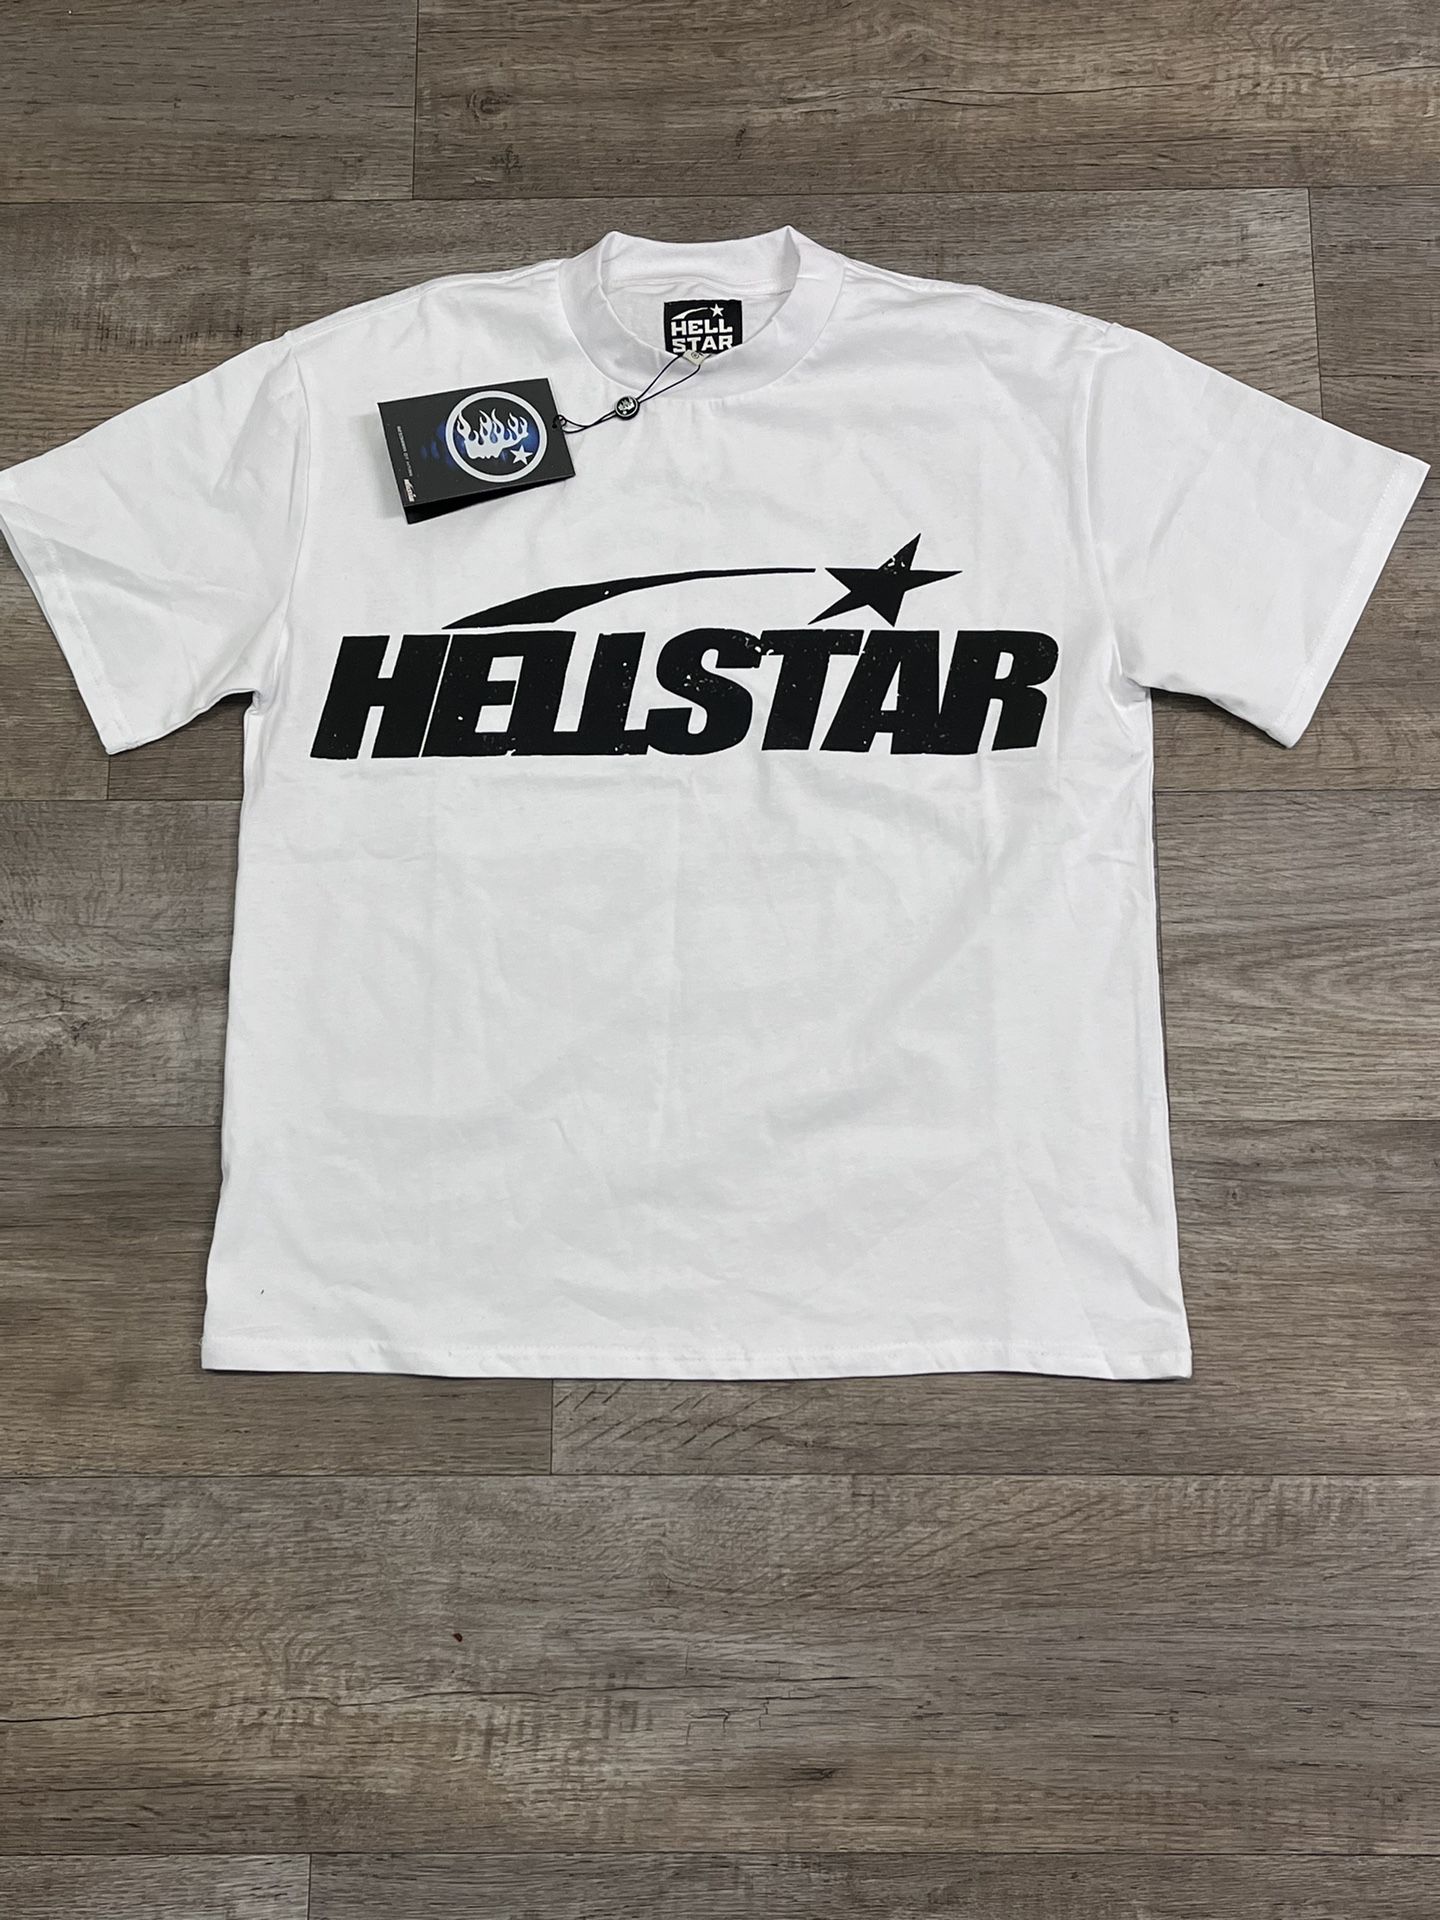 NEW Hellstar T-shirt 